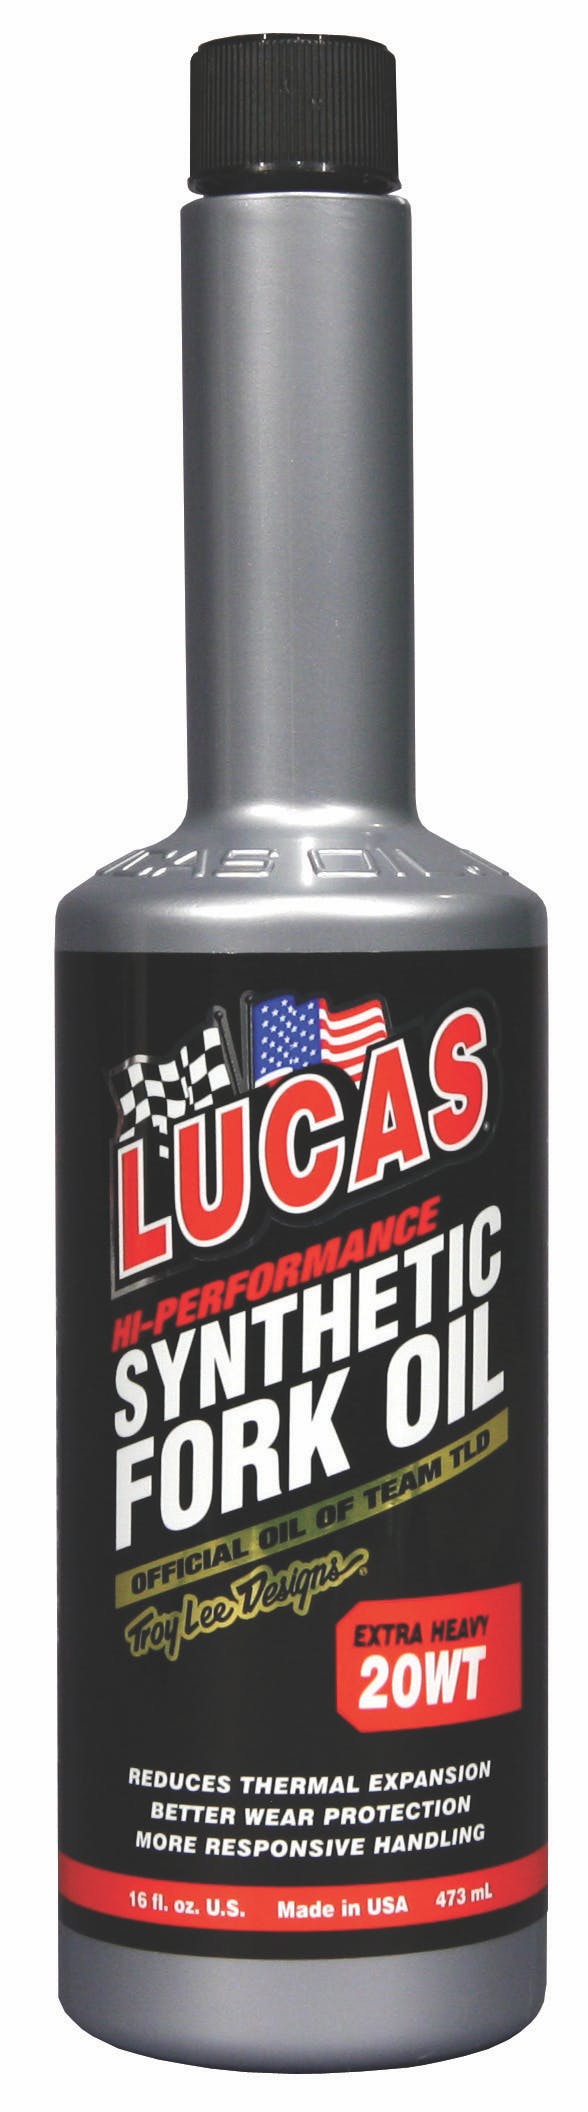 Lucas OIL Synthetic Fork Oil Extra Heavy 20wt. (16 OZ) 20779